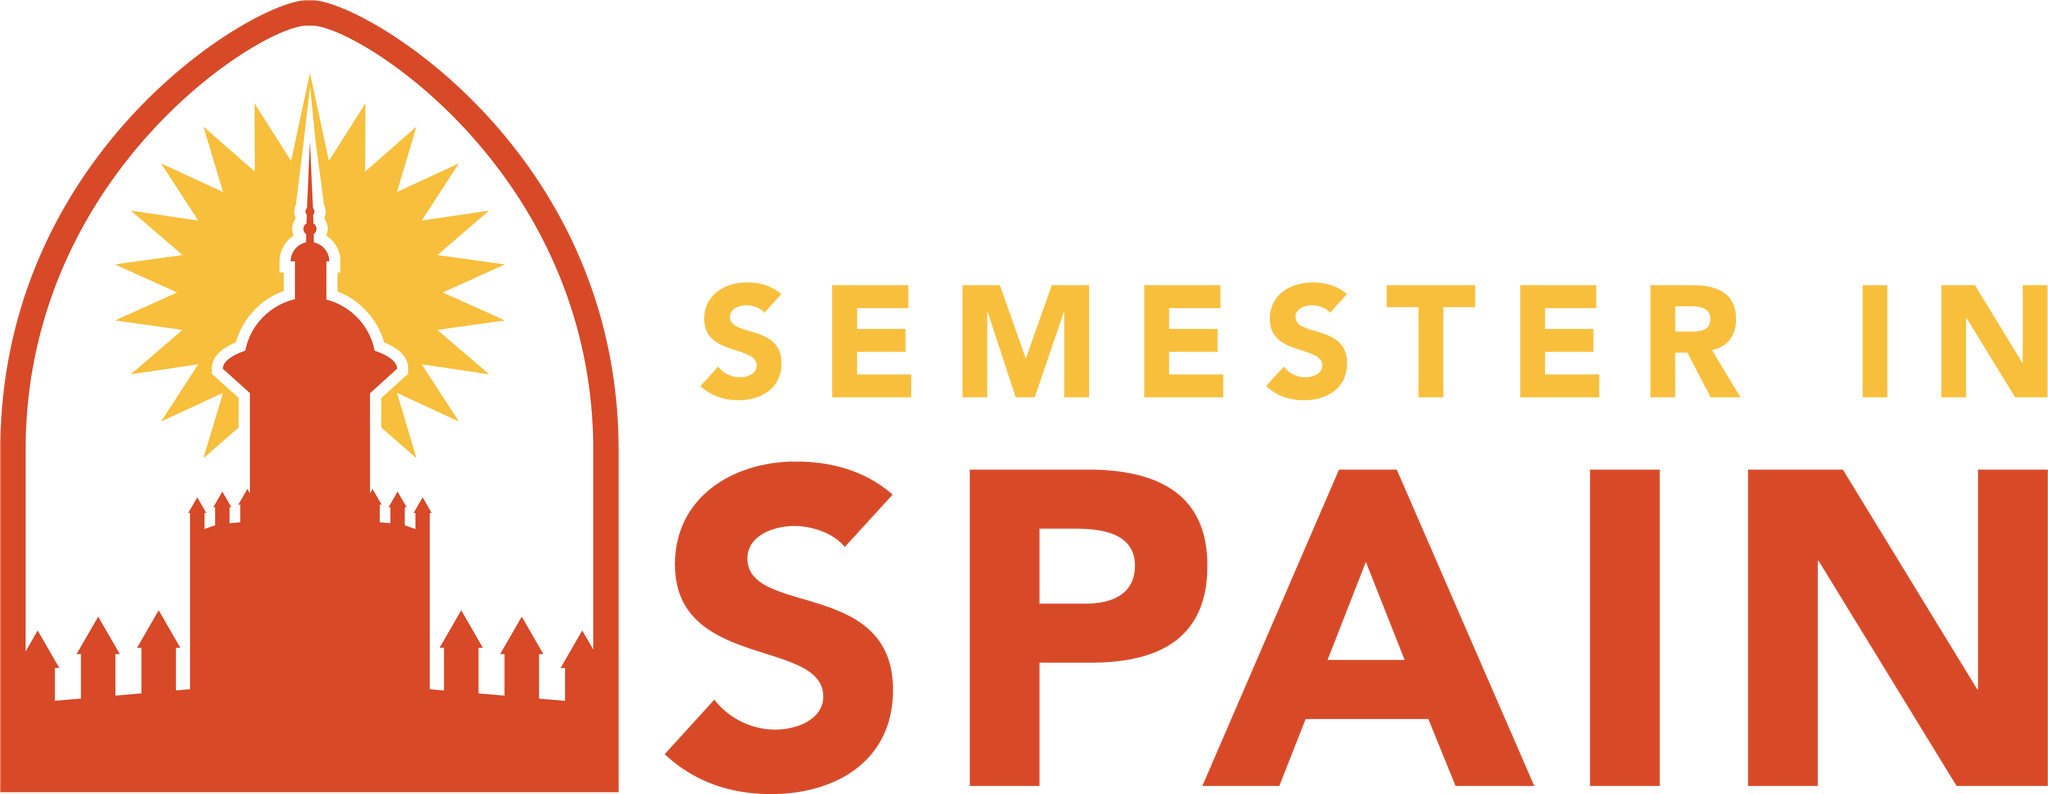 Semester in Spain Logo